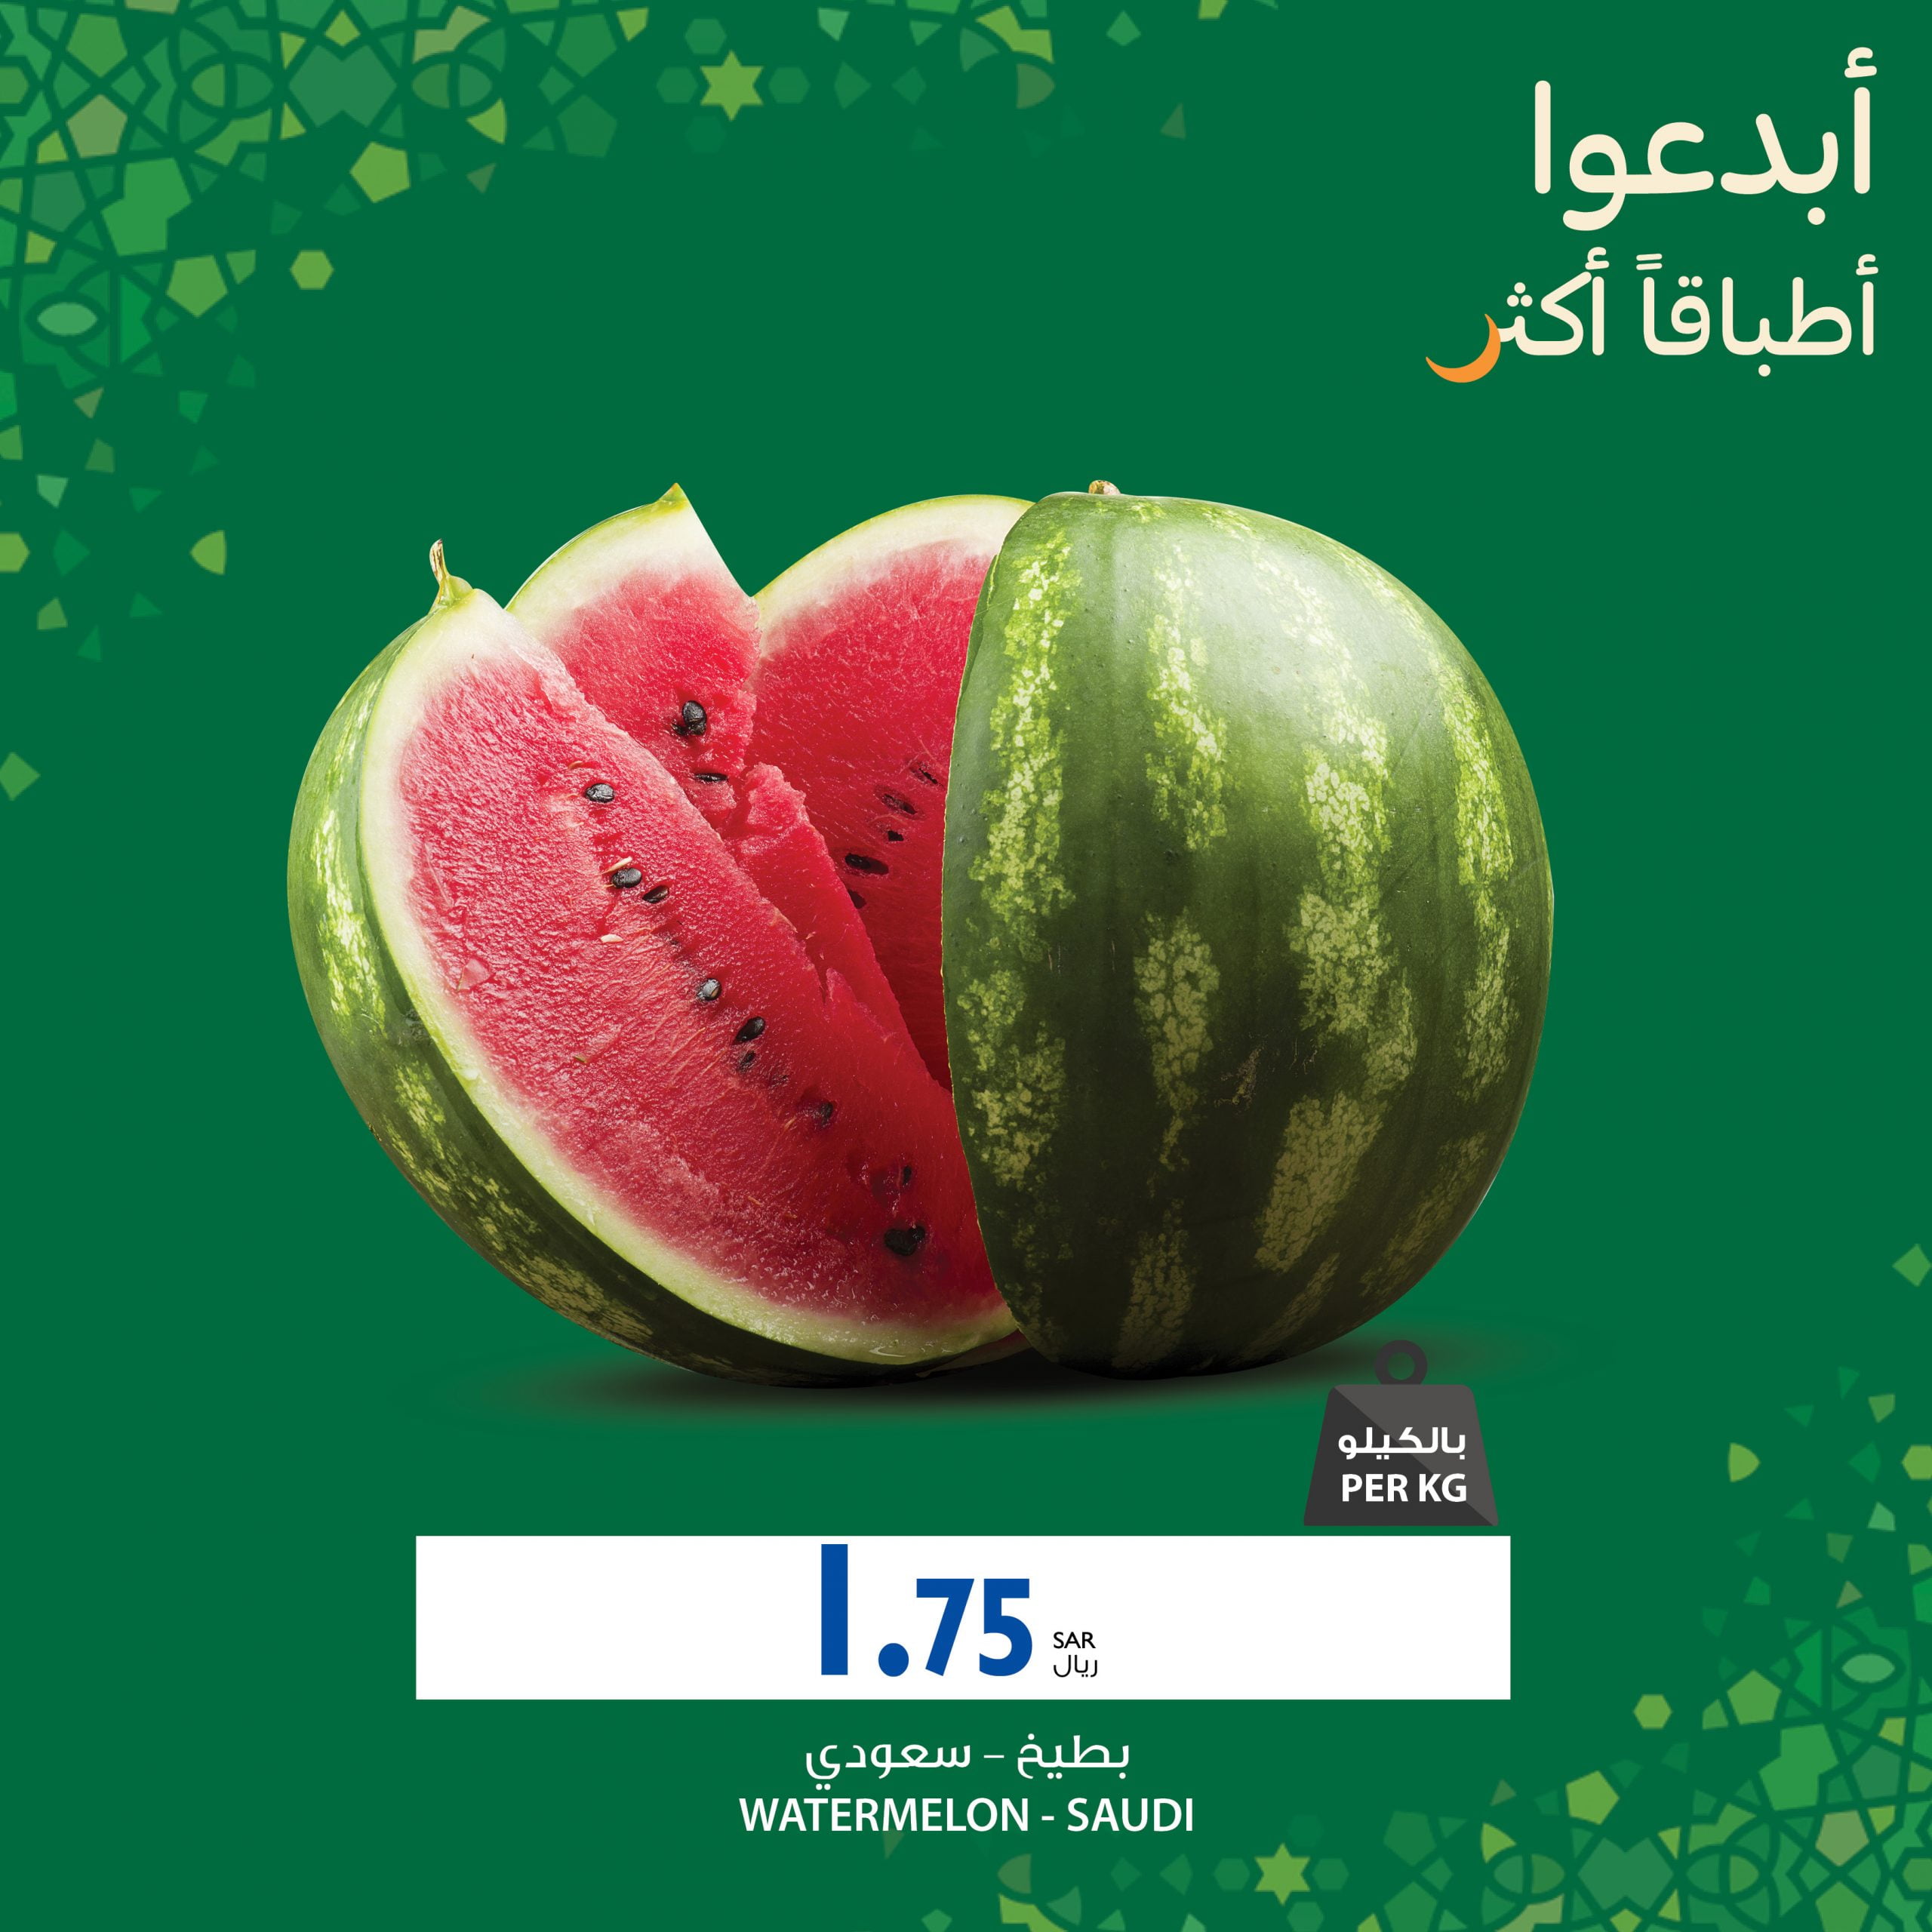 CarrefourSaudi 1260827185713045505 2 scaled - عروض رمضان : عروض كارفور السعودية عروض خضروات اليوم لمدة ٣ ايام بين ٢١ و٢٣ رمضان